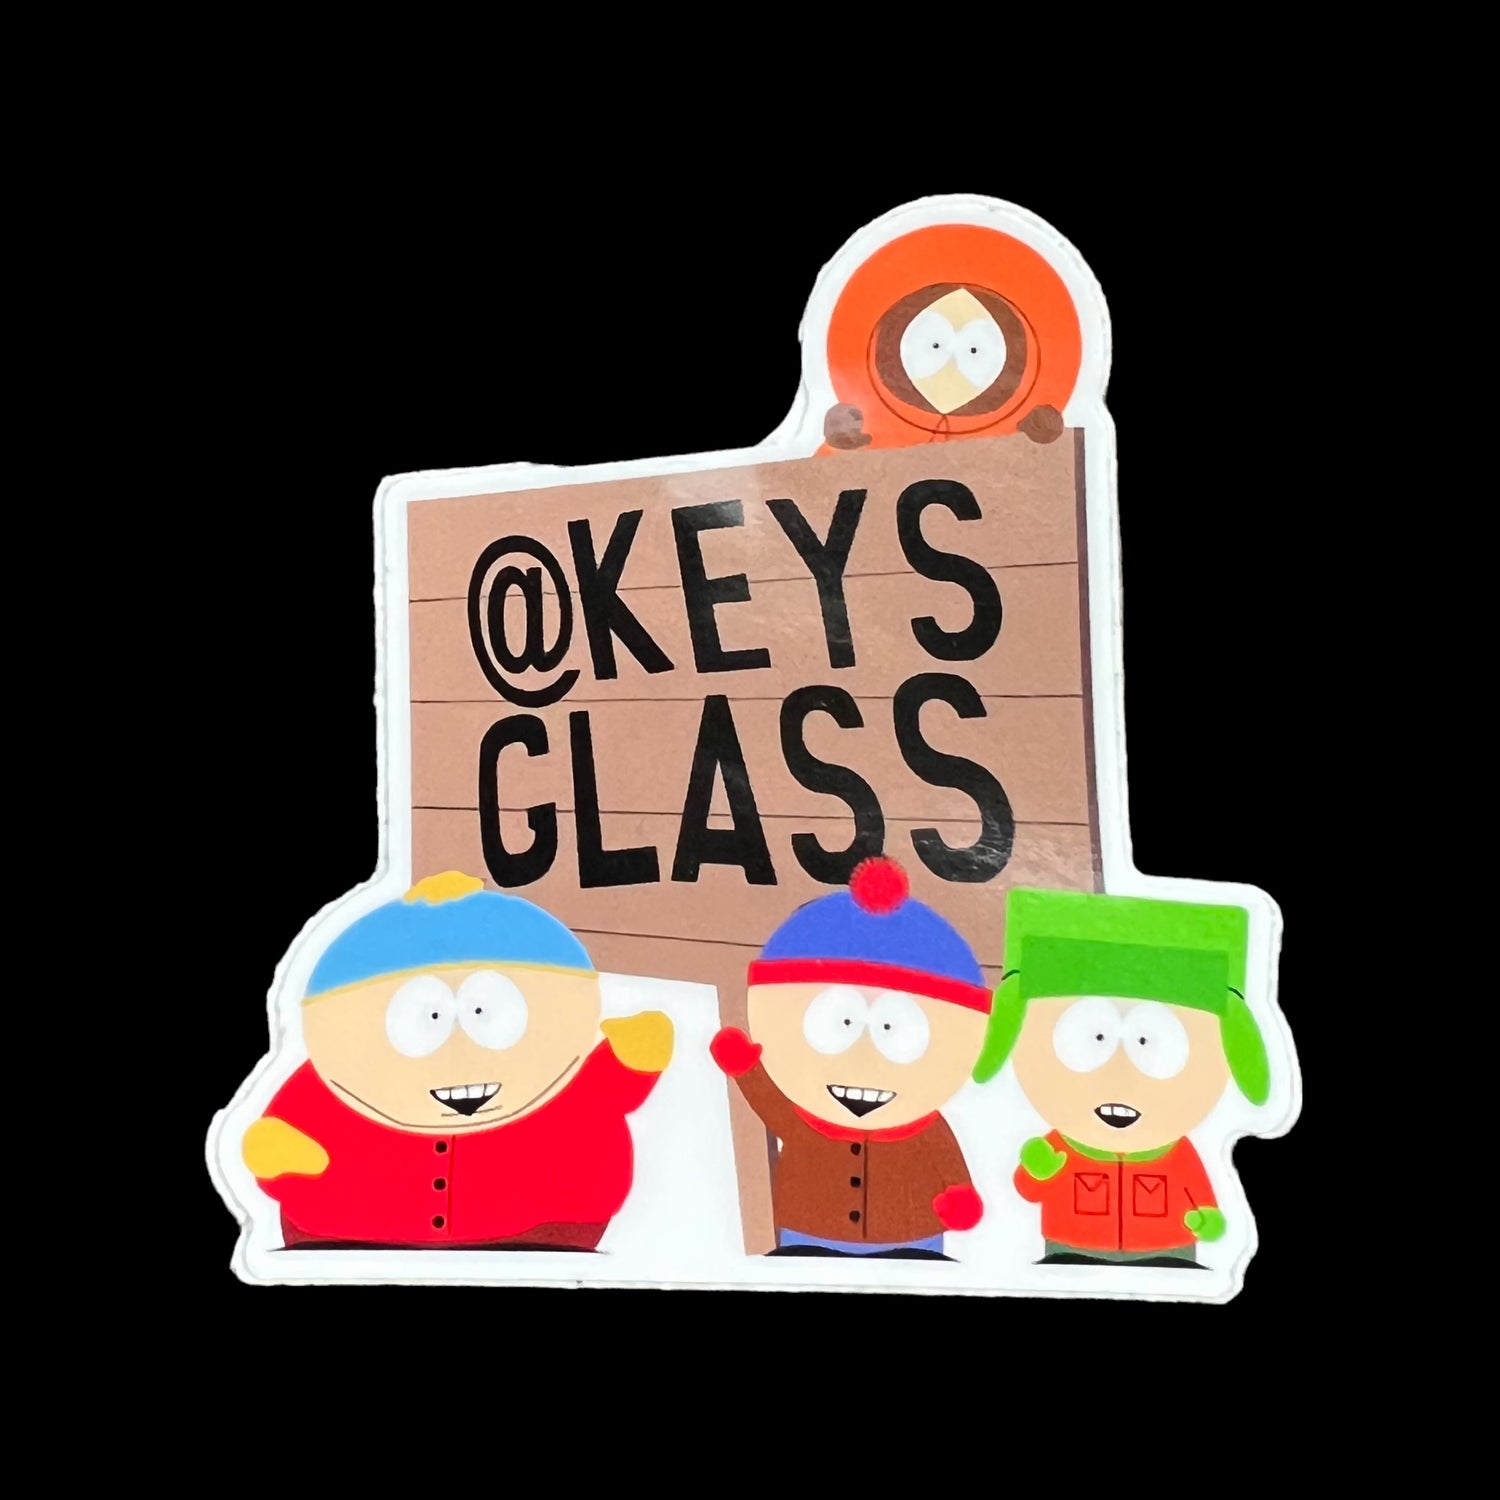 -Keys Glass